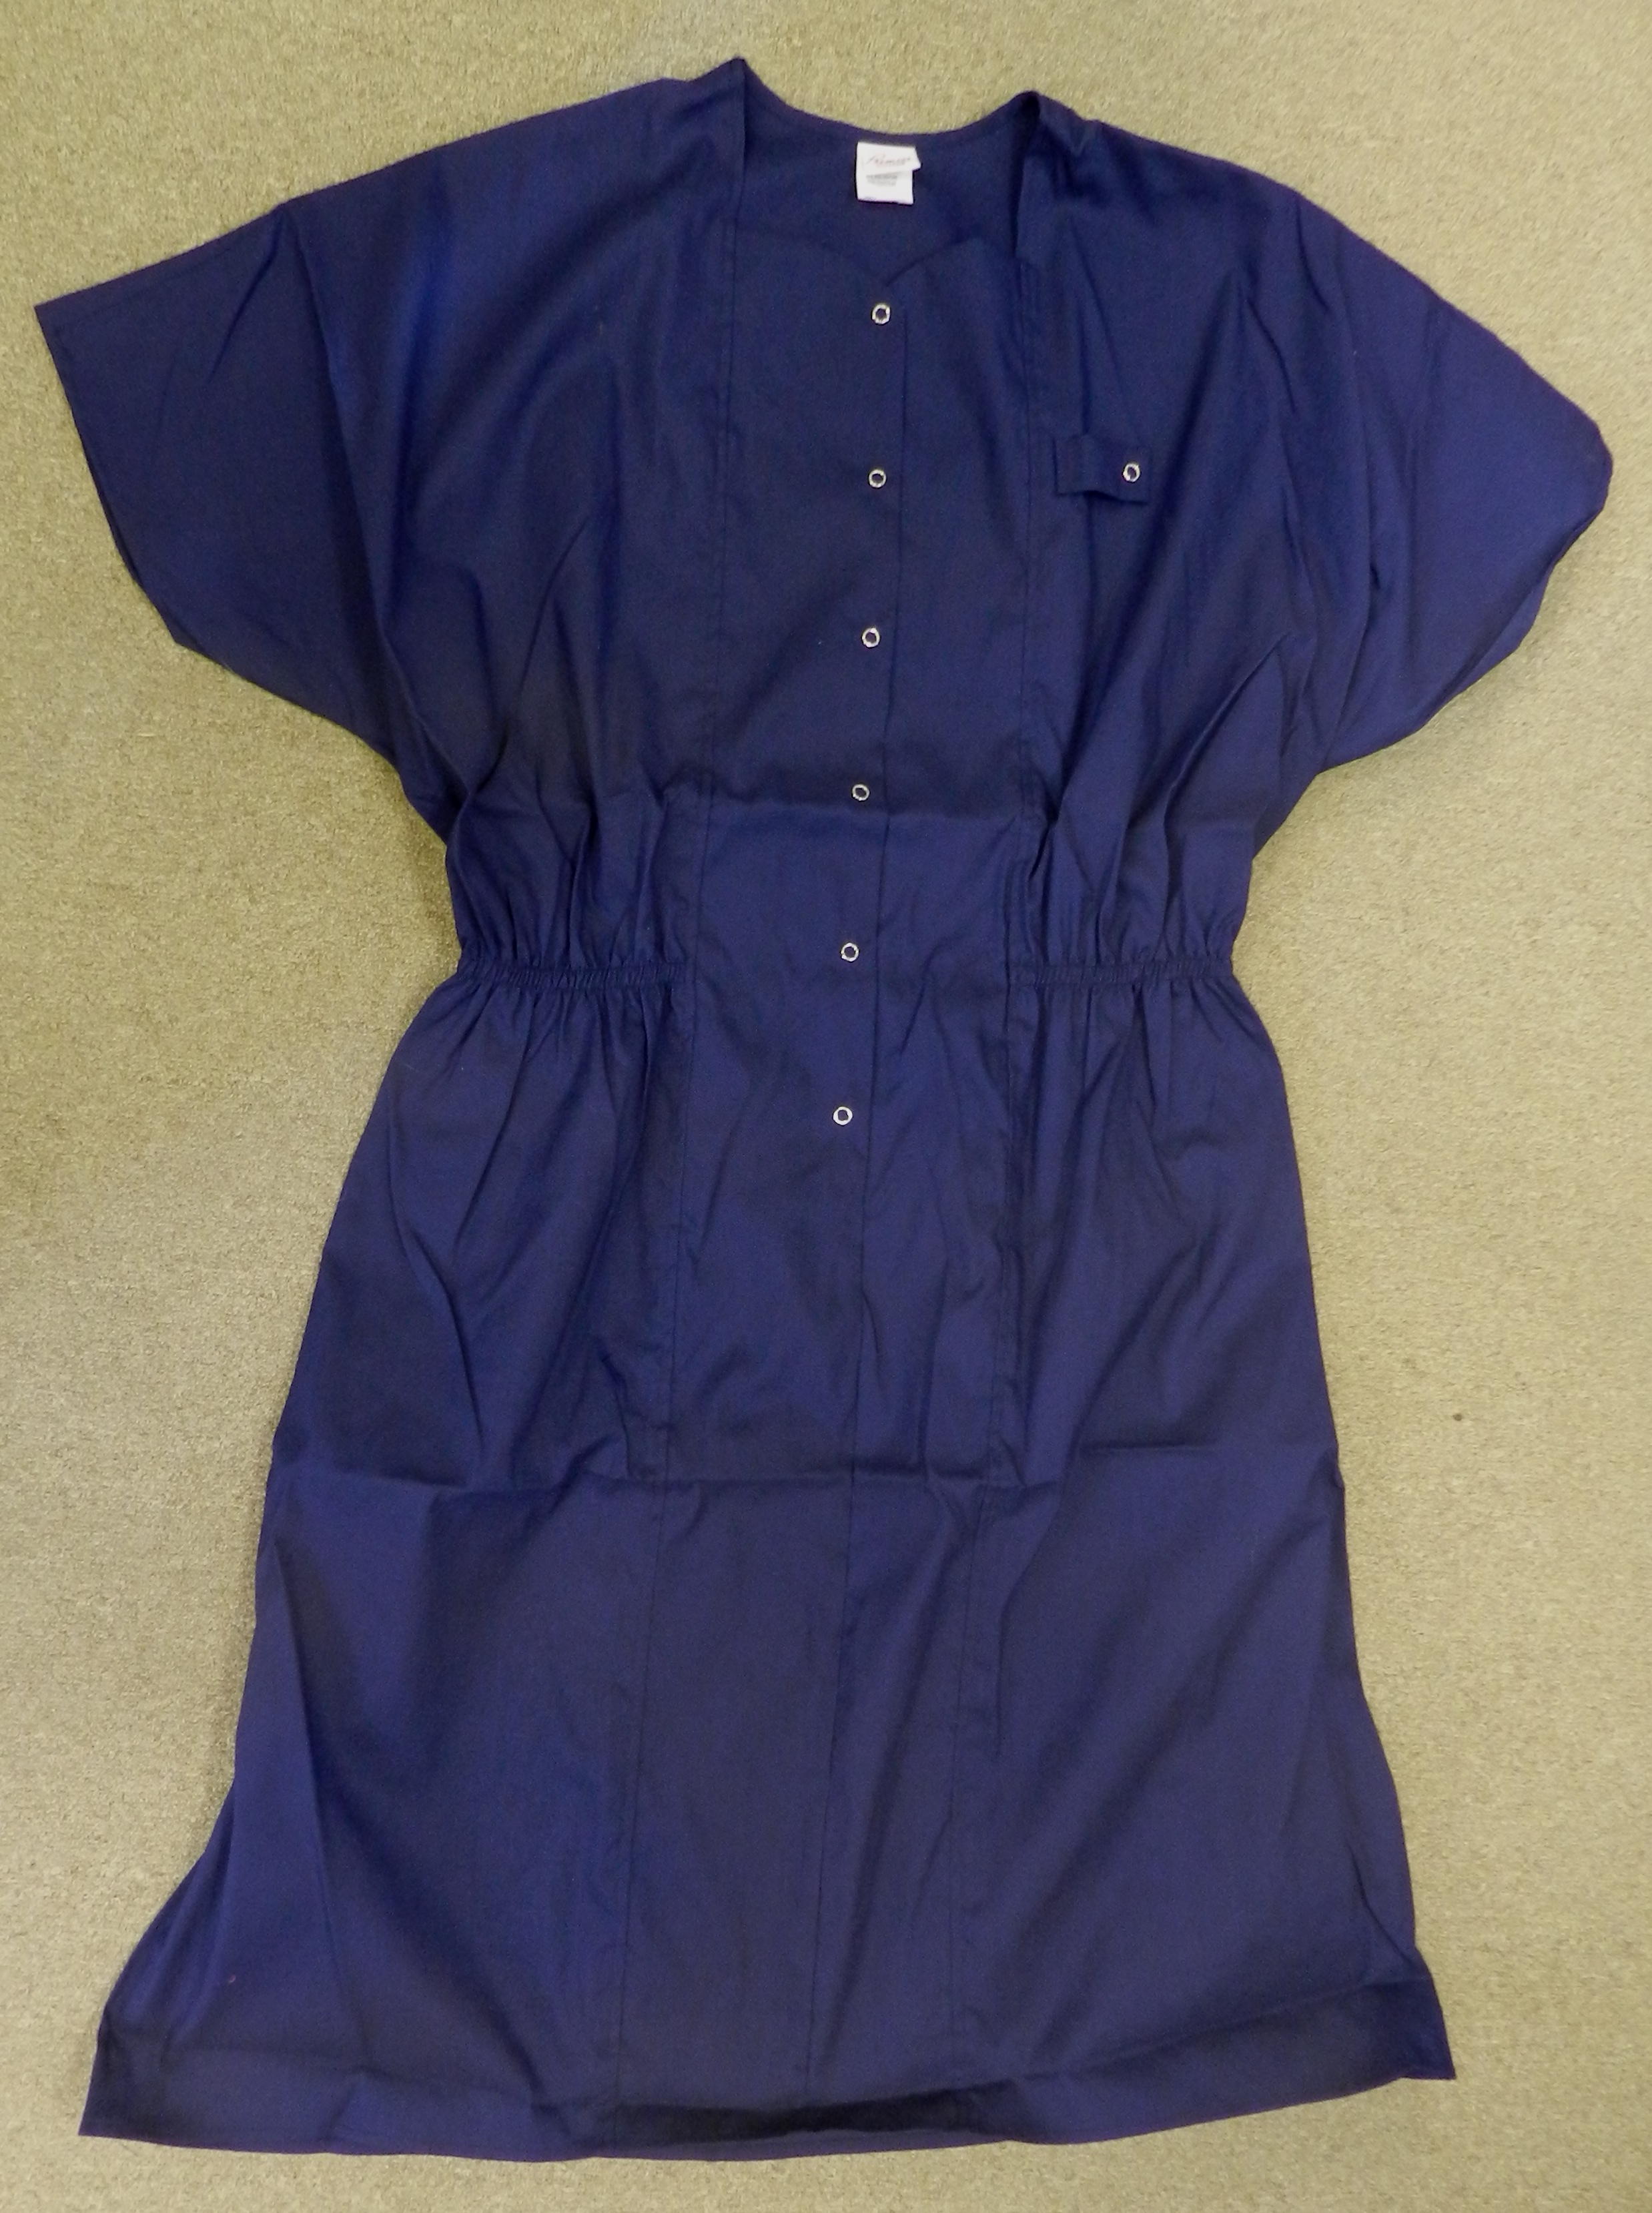 Premier Uniforms Medical Nurse Snap Front Scrub Dress Navy Blue 4X New ...